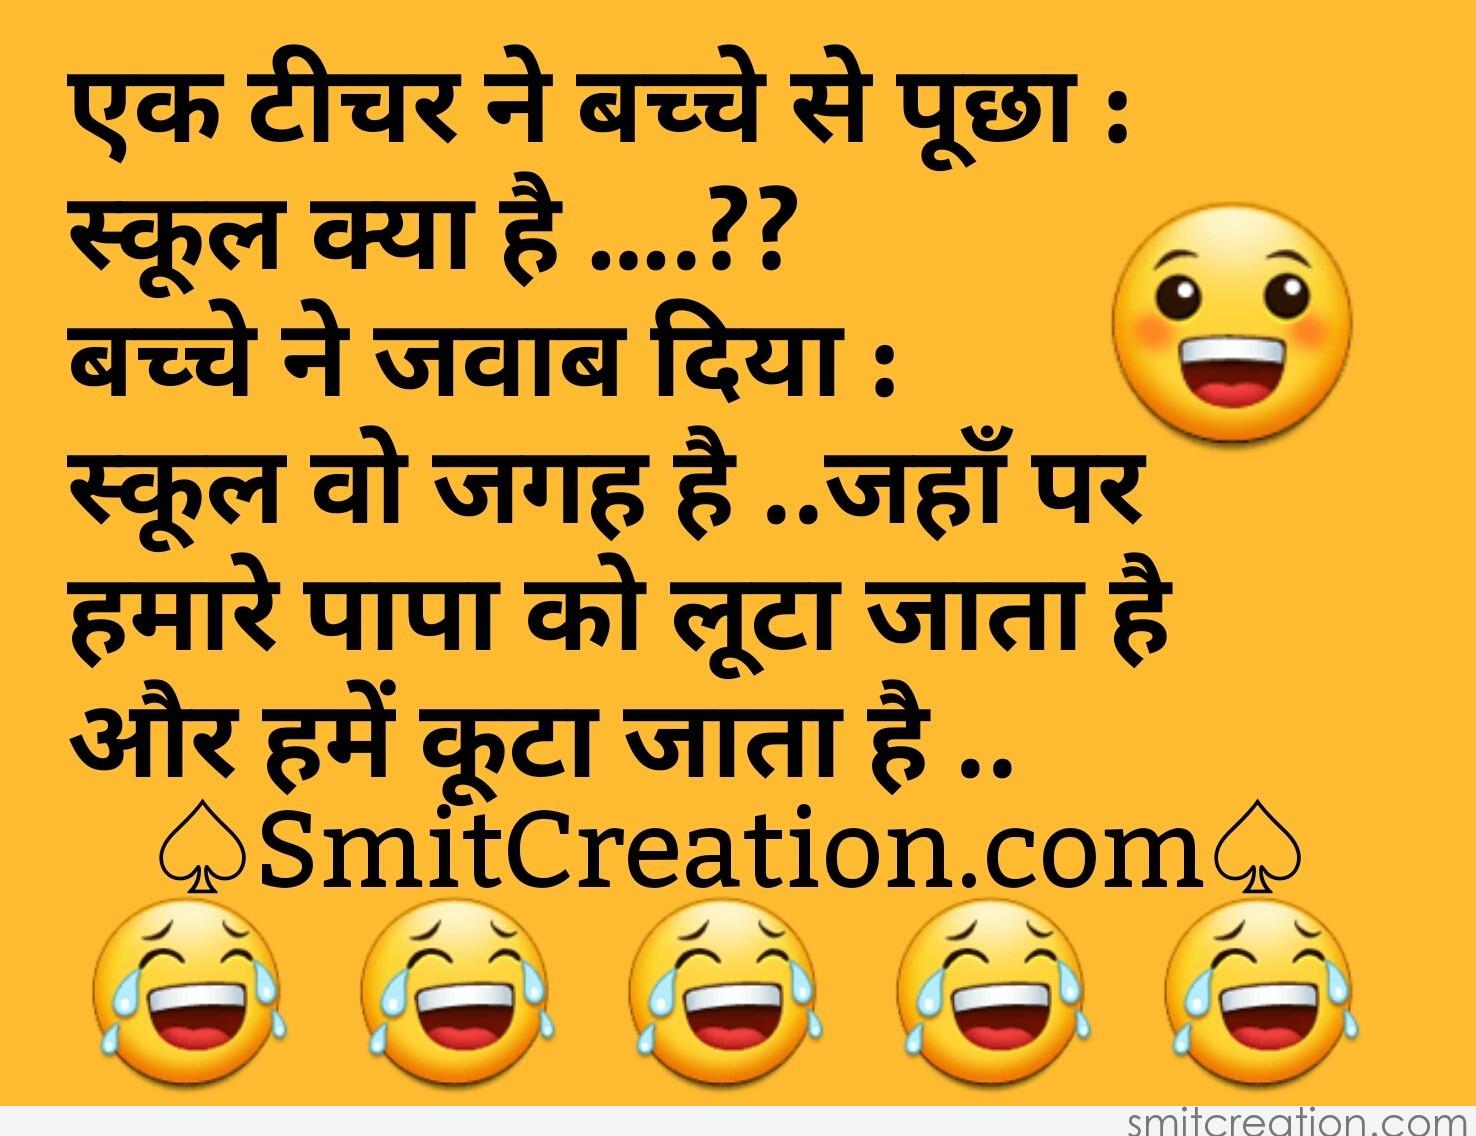 Teacher Student Joke In Hindi - SmitCreation.com